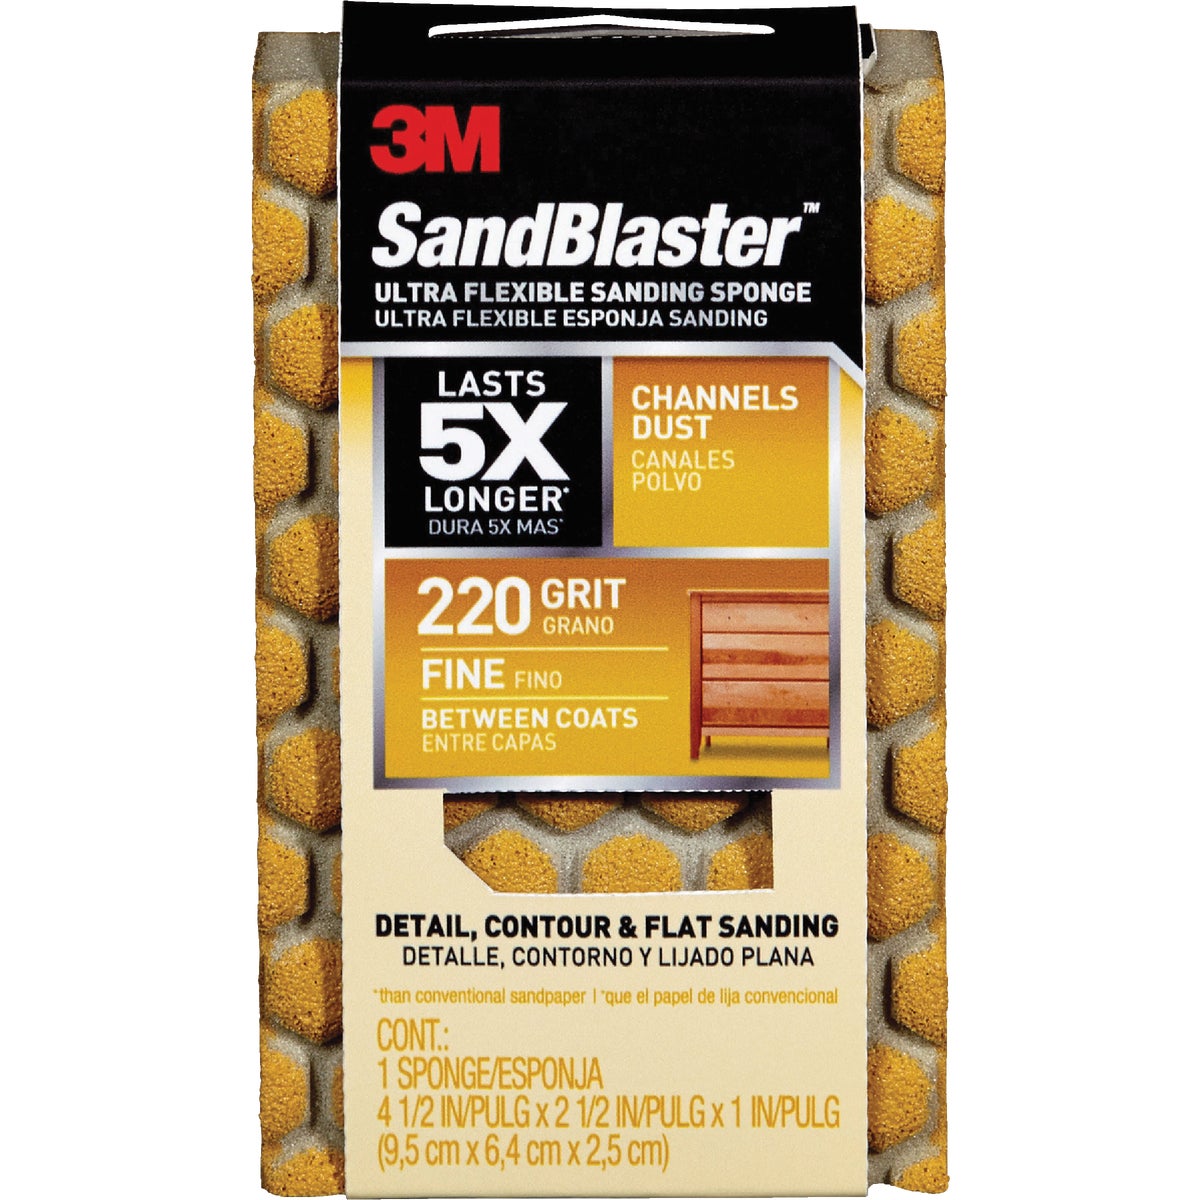 3M SandBlaster Ultra Flexible 2-1/2 In. x 4-1/2 In. x 1 In. 220 Grit Fine Sanding Sponge